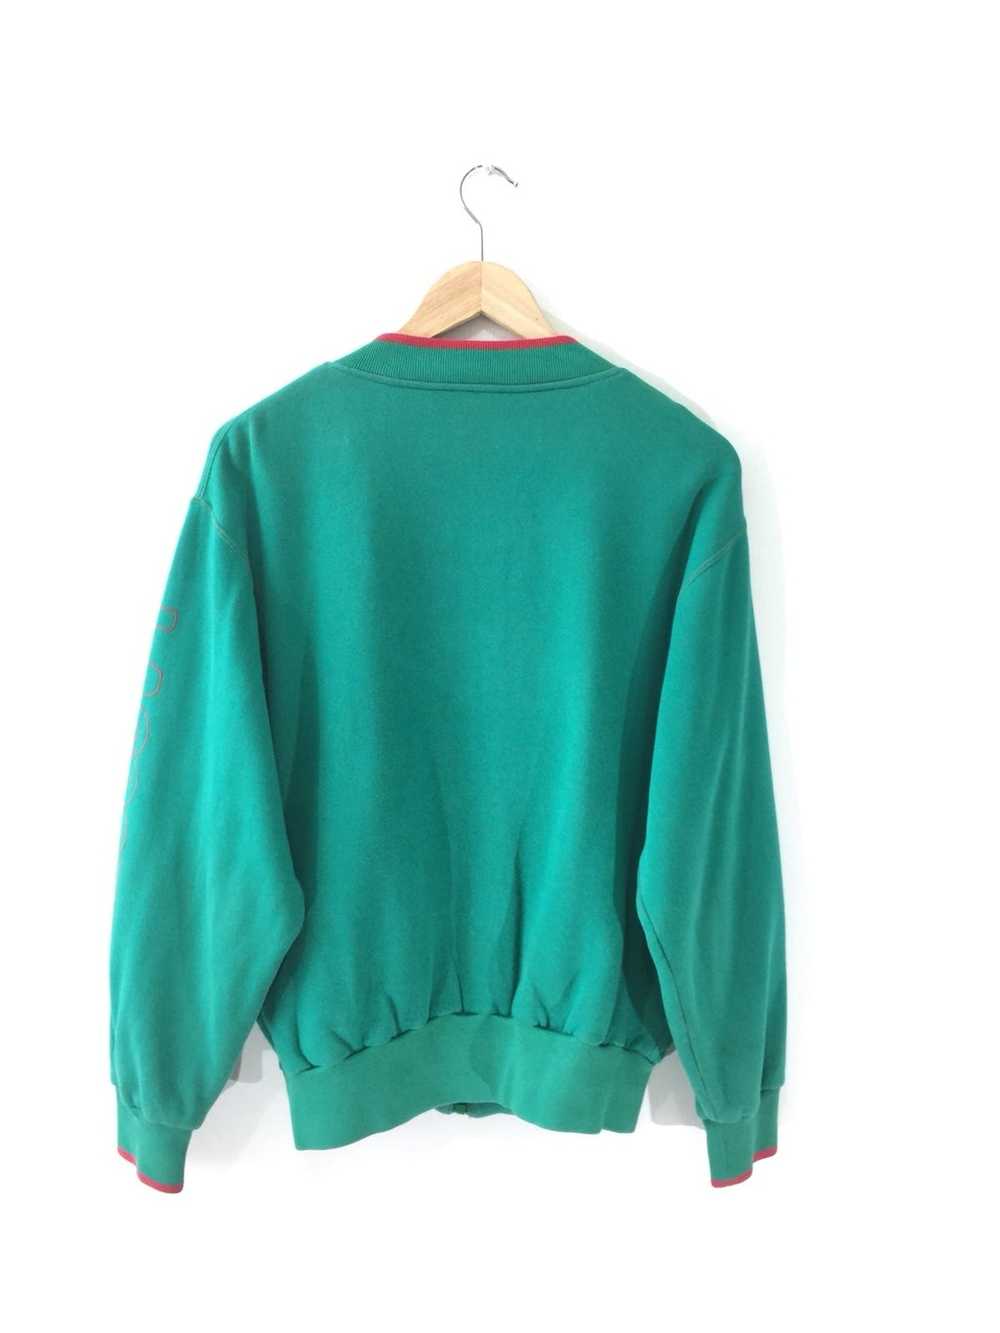 Lacoste × Vintage Lacoste Sweatshirts - image 7